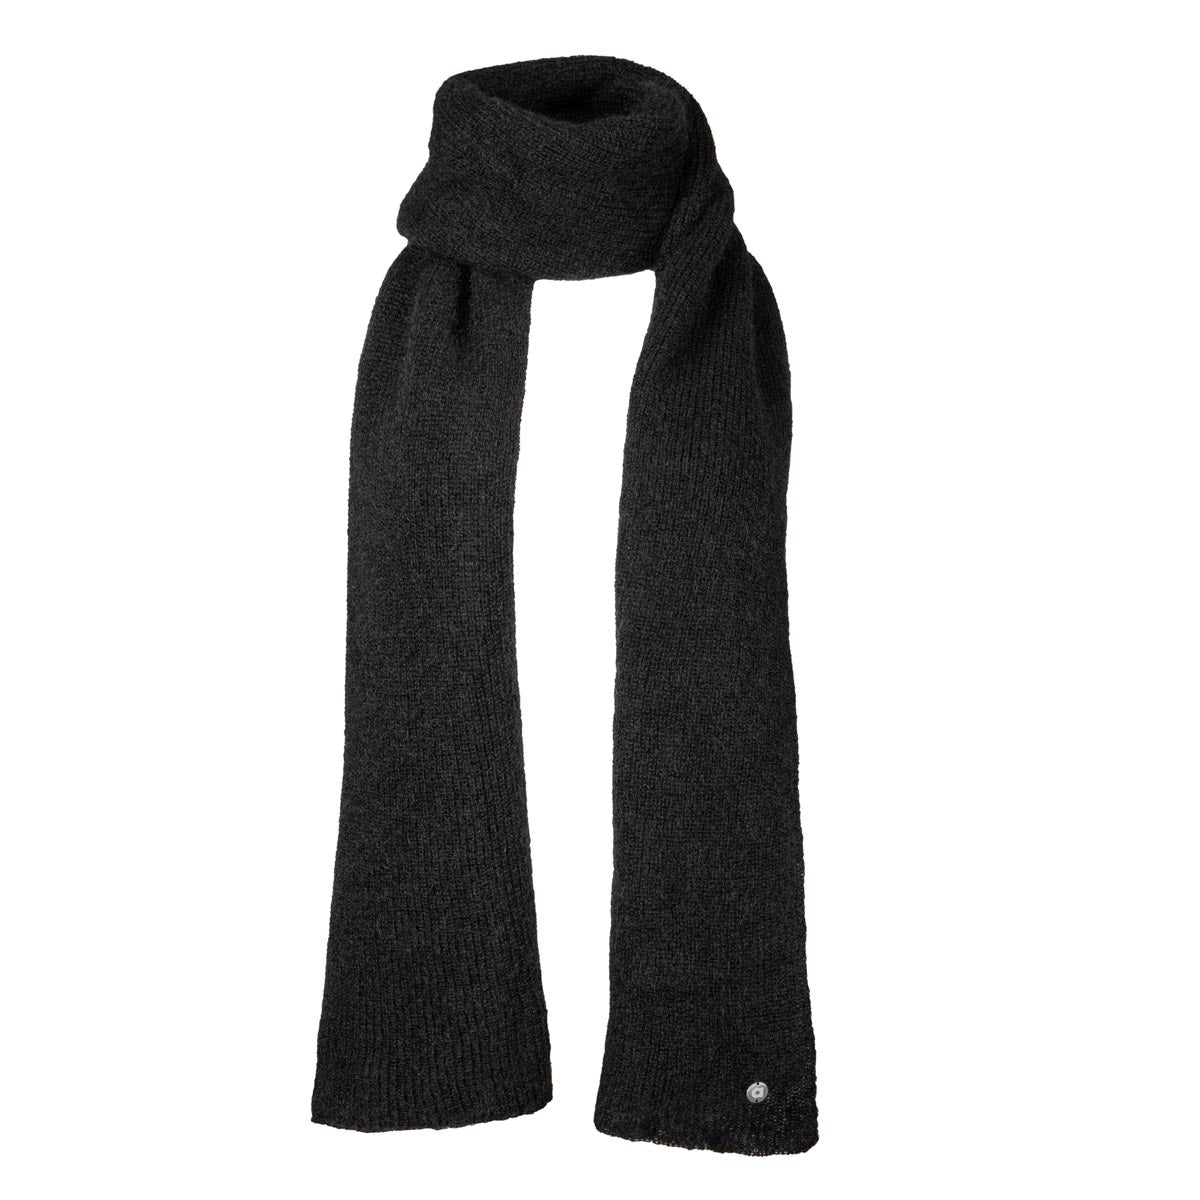 Teresa scarf, black